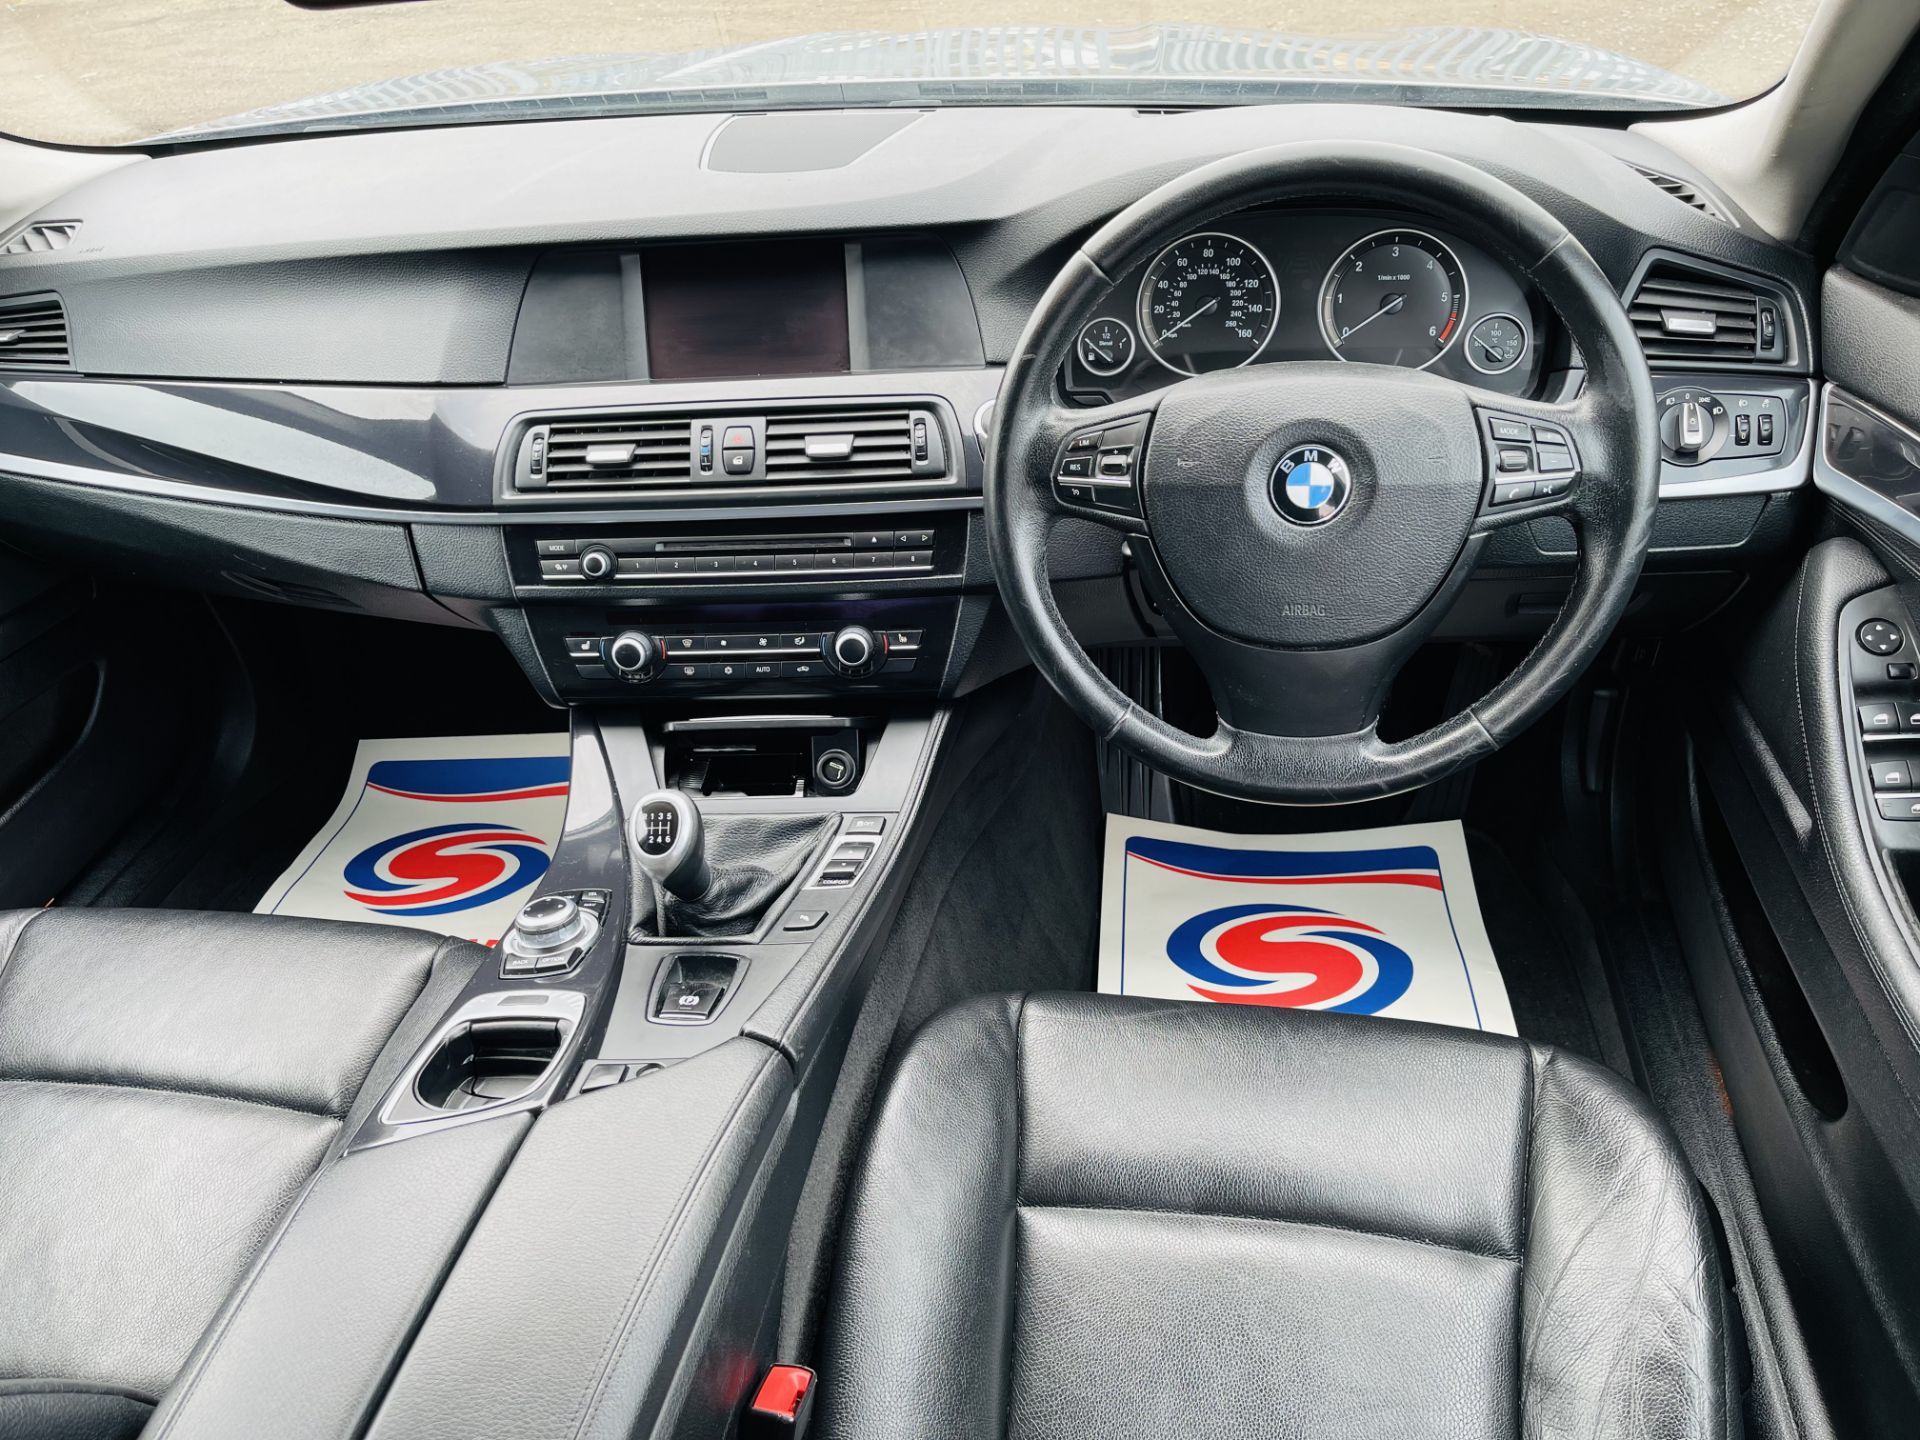 BMW 2.0 520D Efficient dynamics, , 2012 '12 Reg', Diesel ,Sat Nav, Air con,** NO VAT SAVE 20% ** - Image 17 of 23